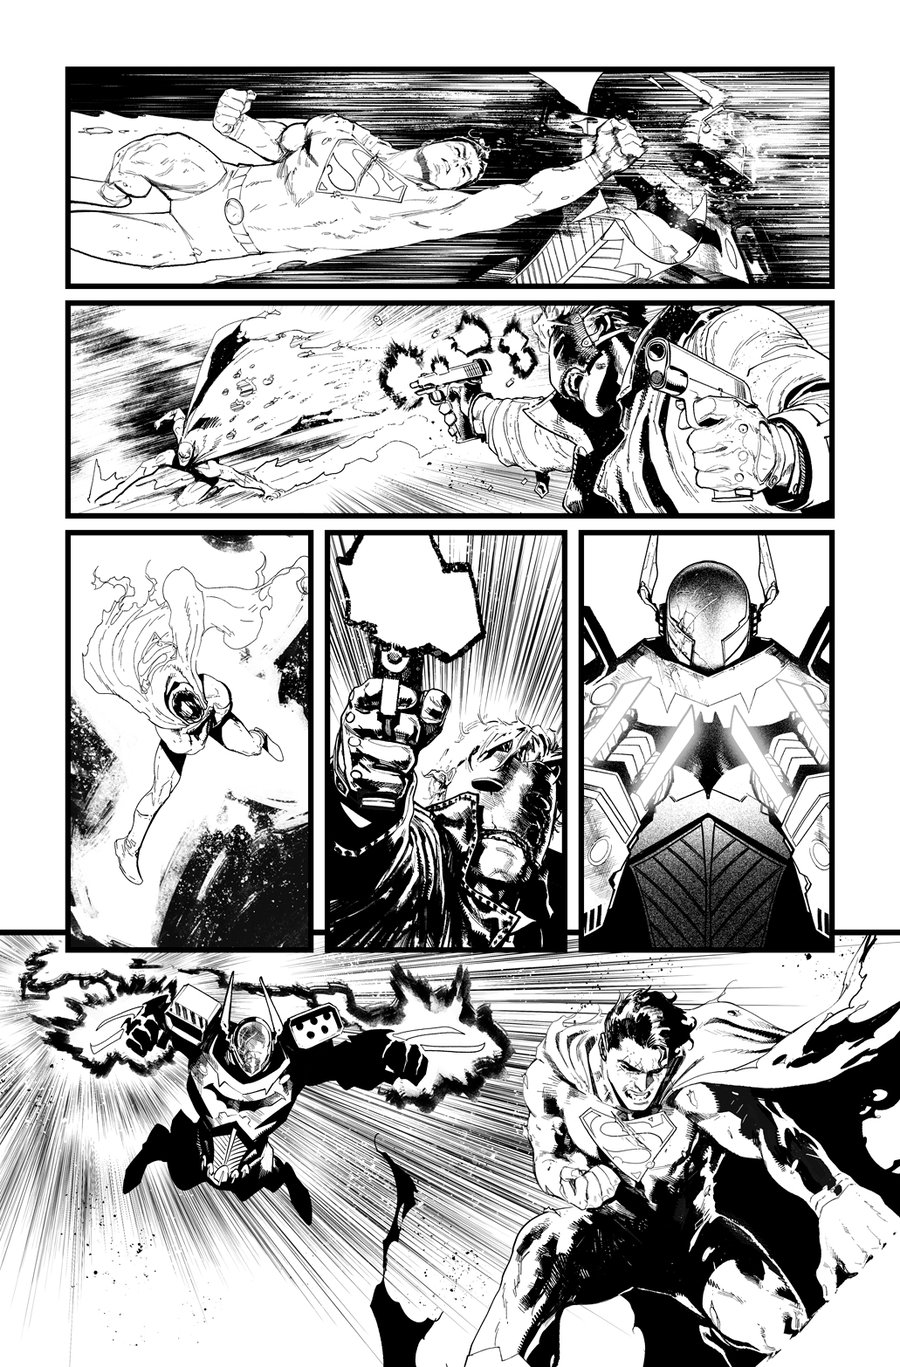 Image of BATMAN/SUPERMAN #3 p.15 ARTIST'S PROOF